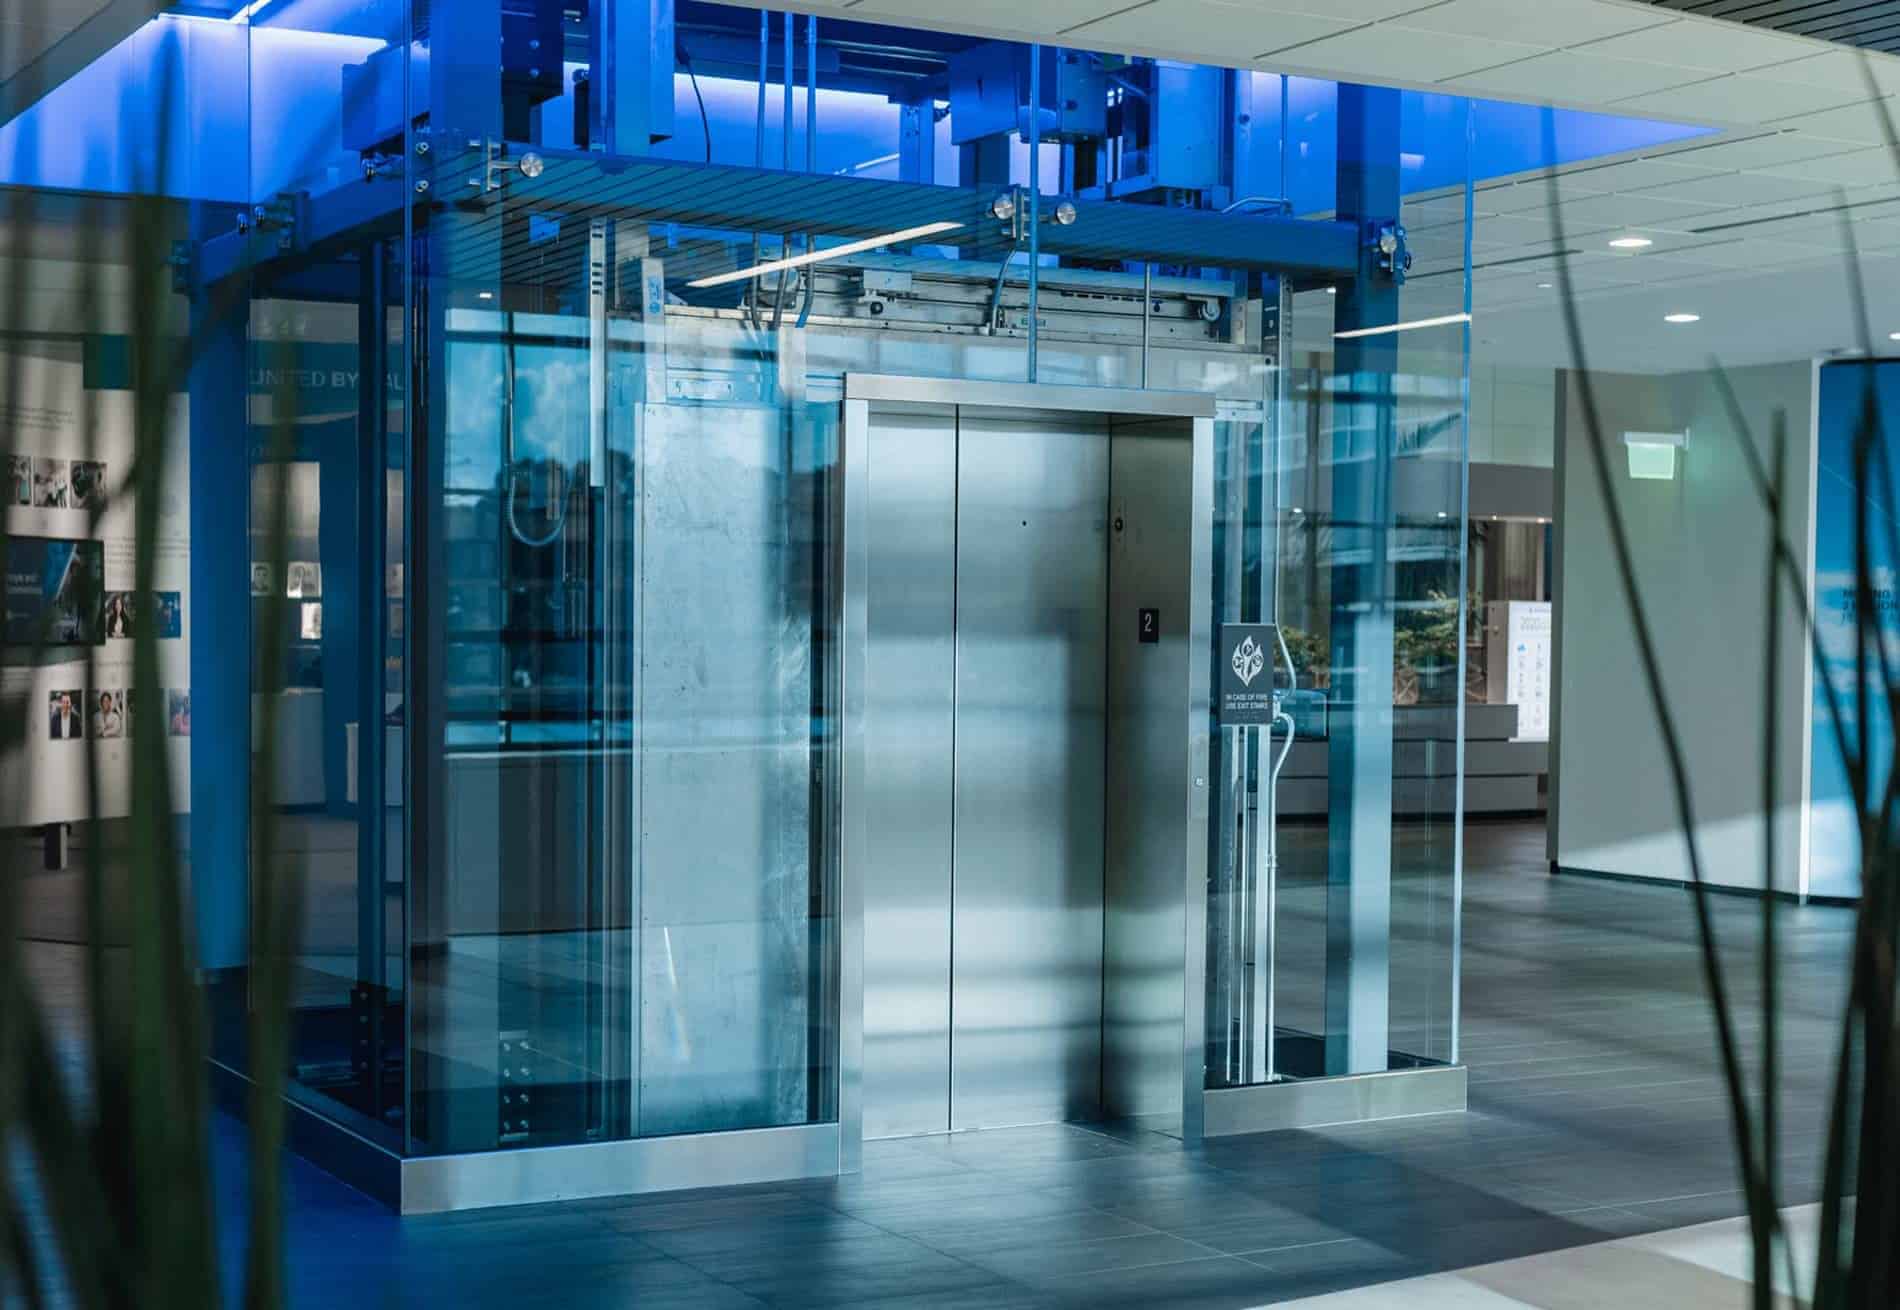 otis elevators / lifts